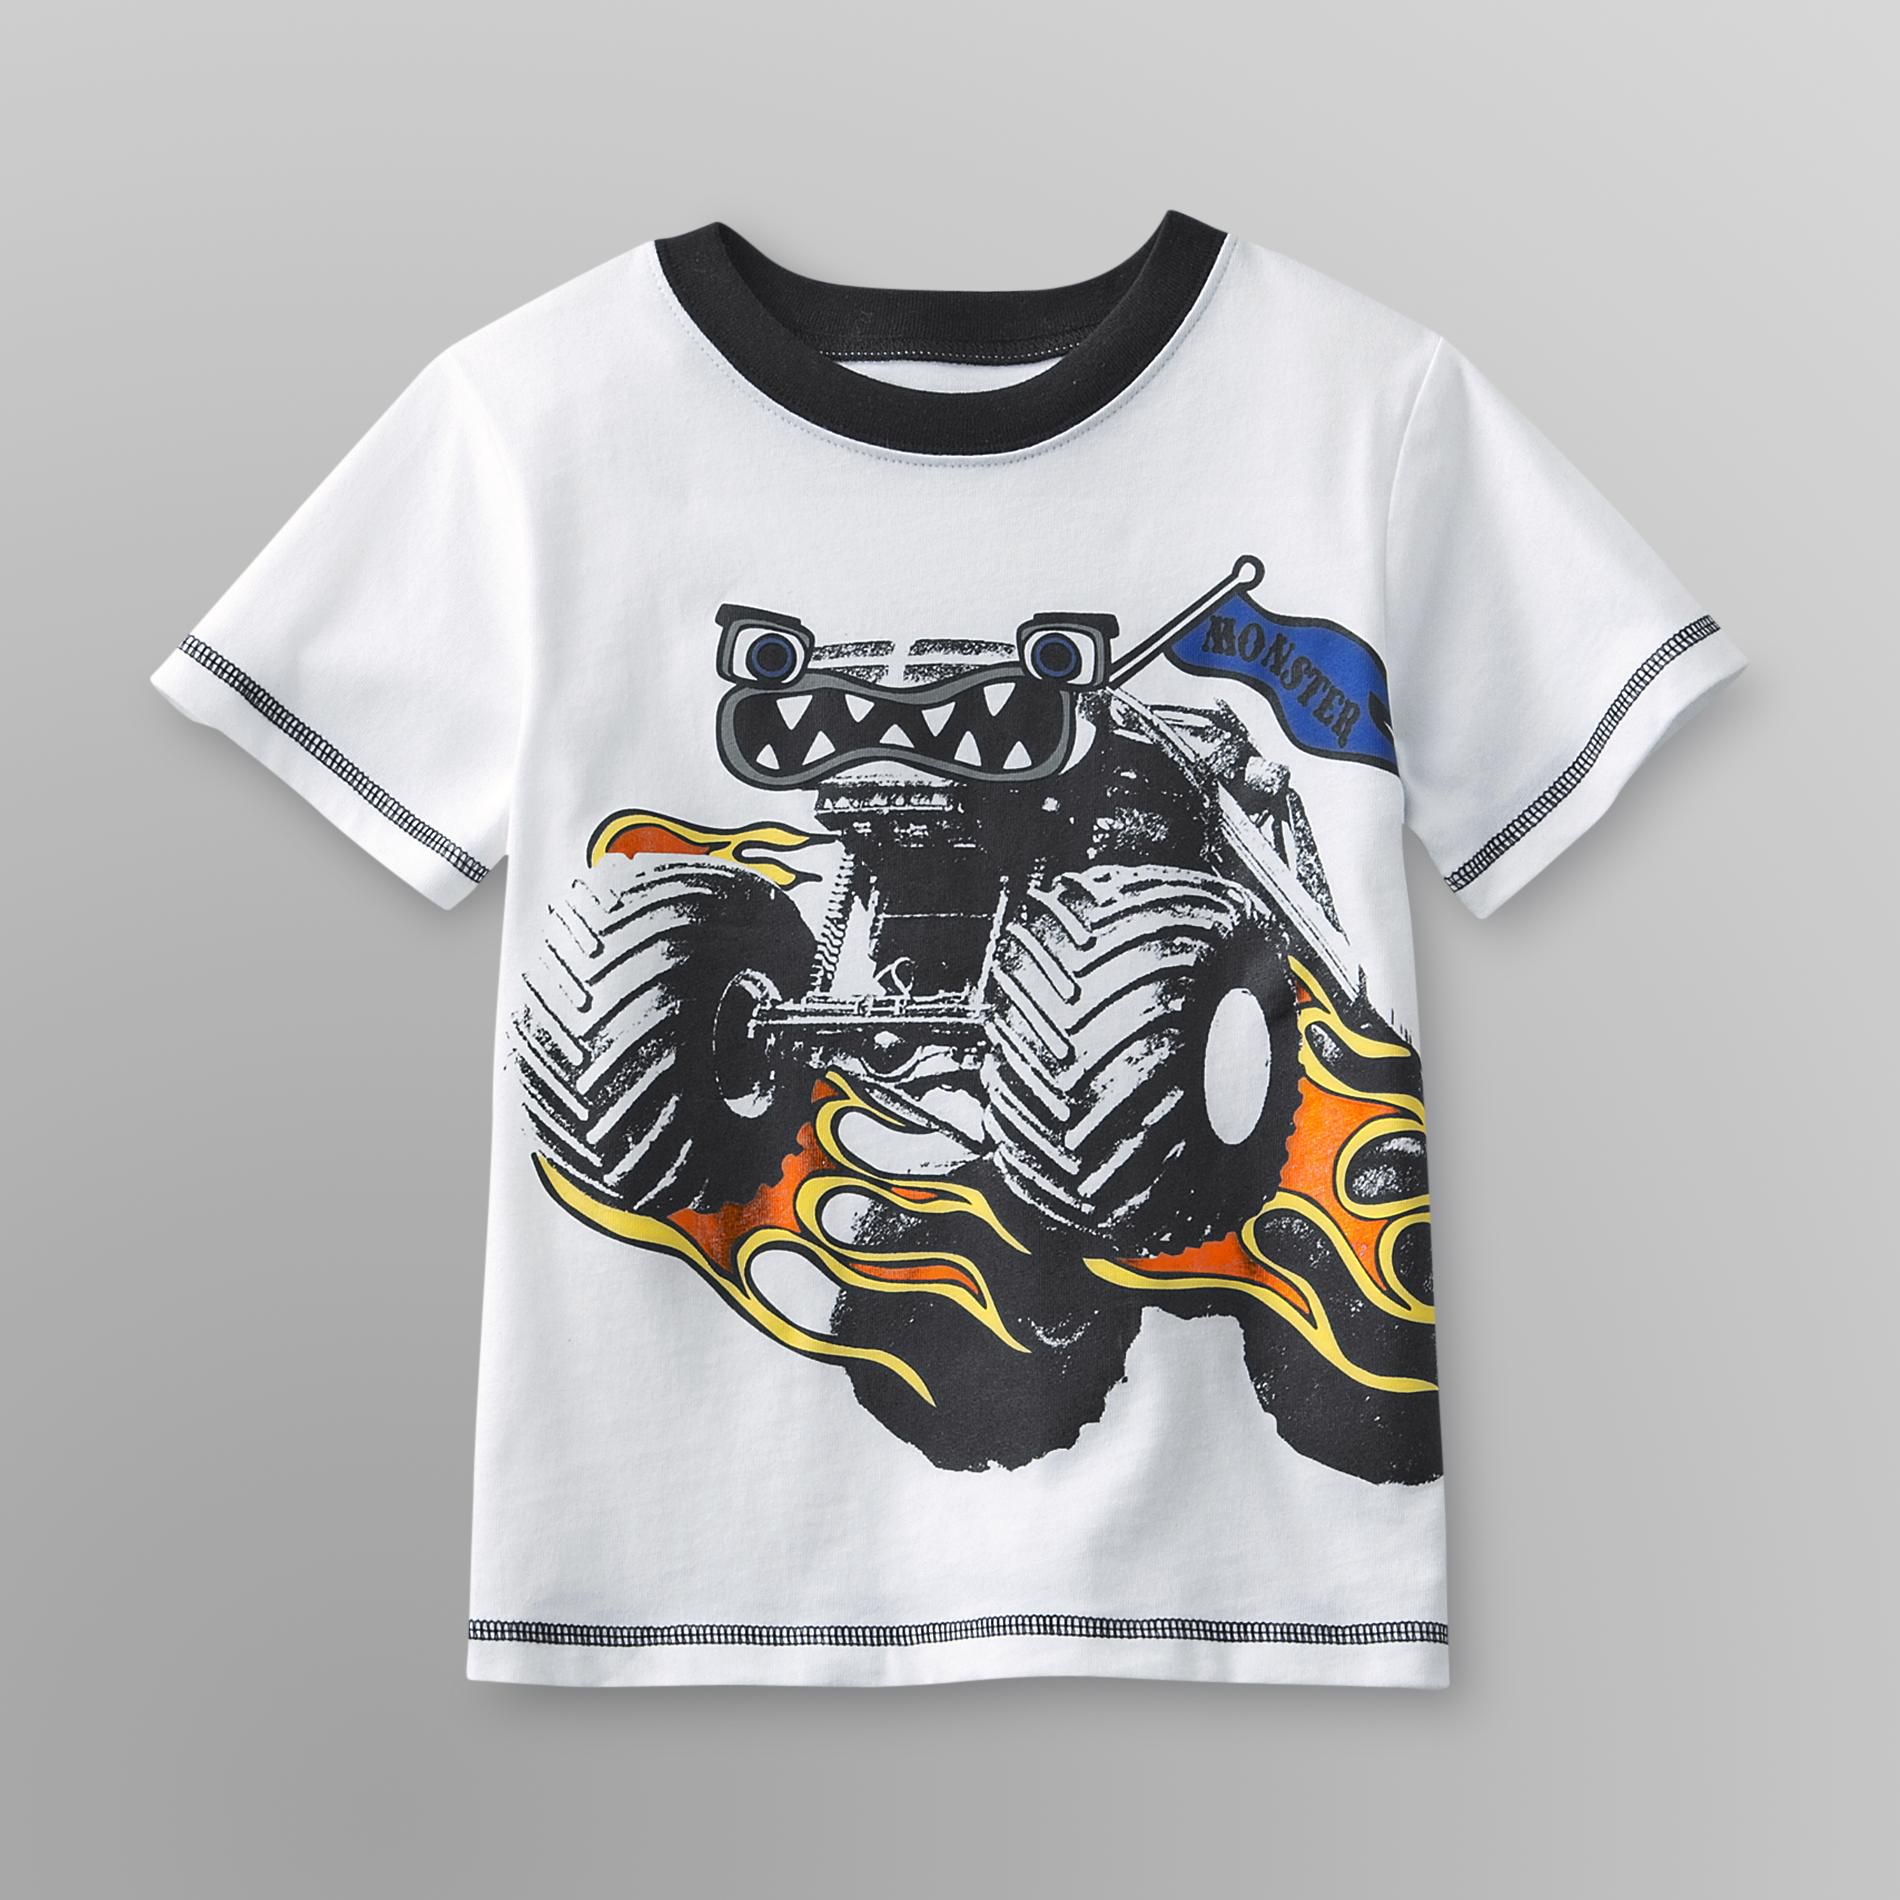 WonderKids Infant & Toddler Boy's Graphic T-Shirt - Monster Truck